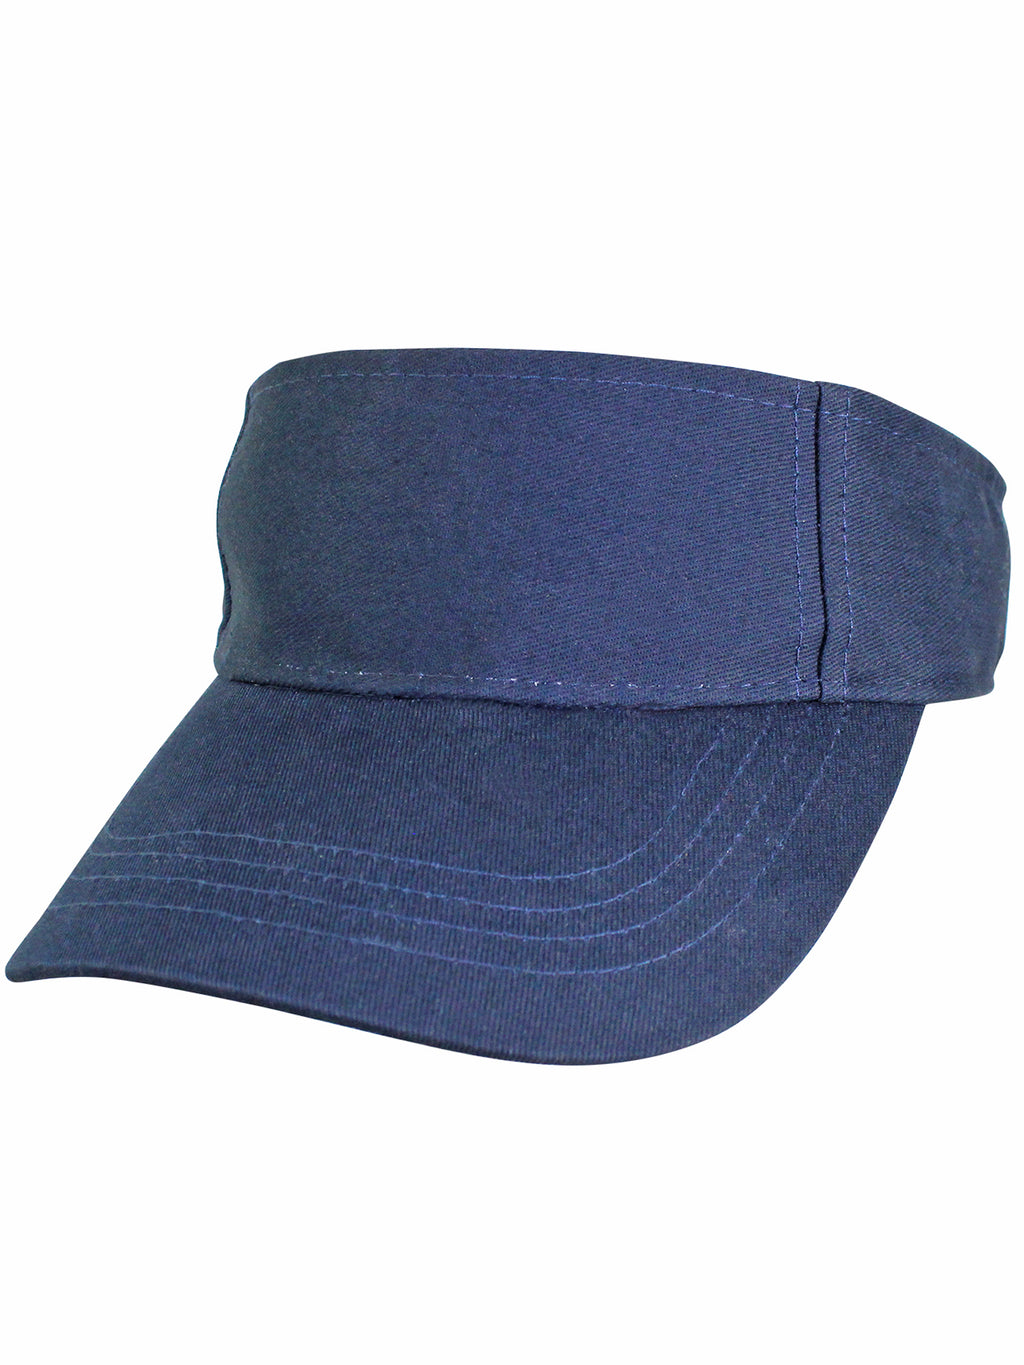 Navy Blue 100% Cotton Sun Sports Visor Hat